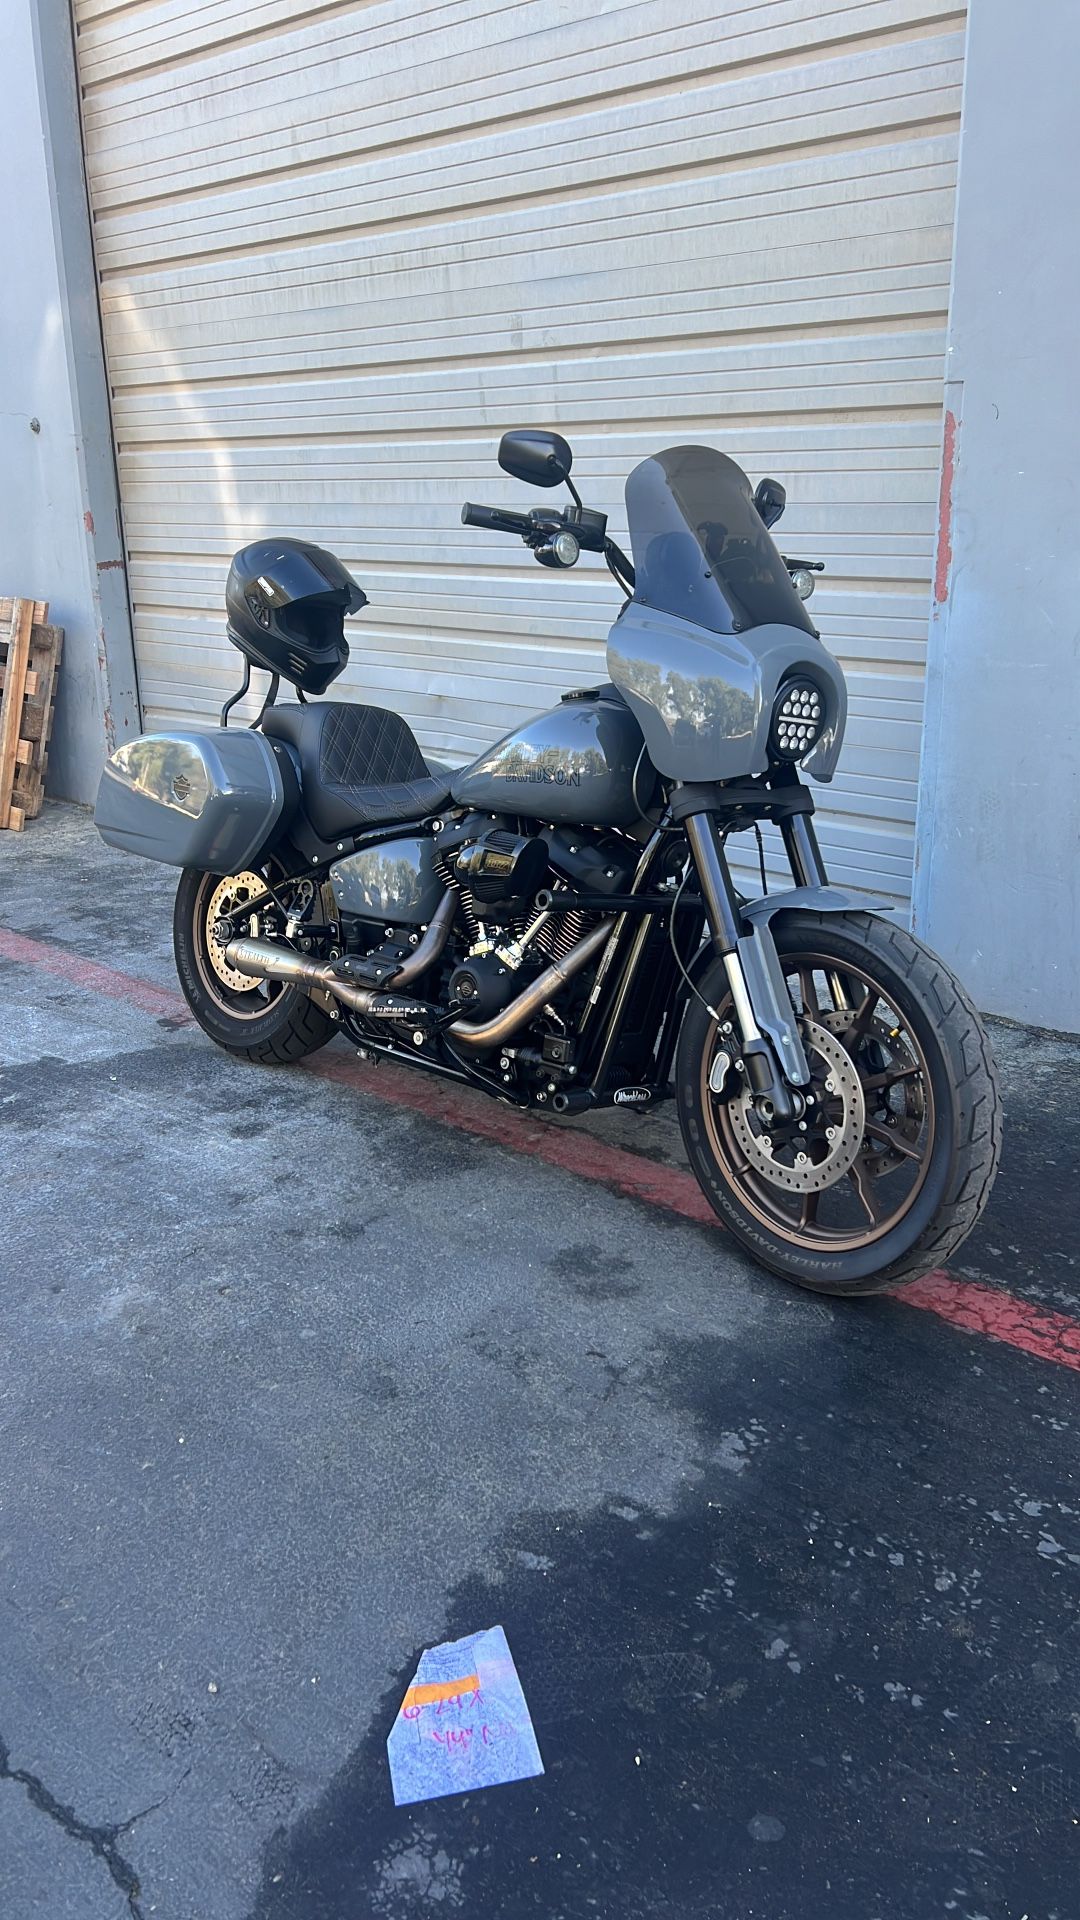 2022 Harley Davidson Lowrider s